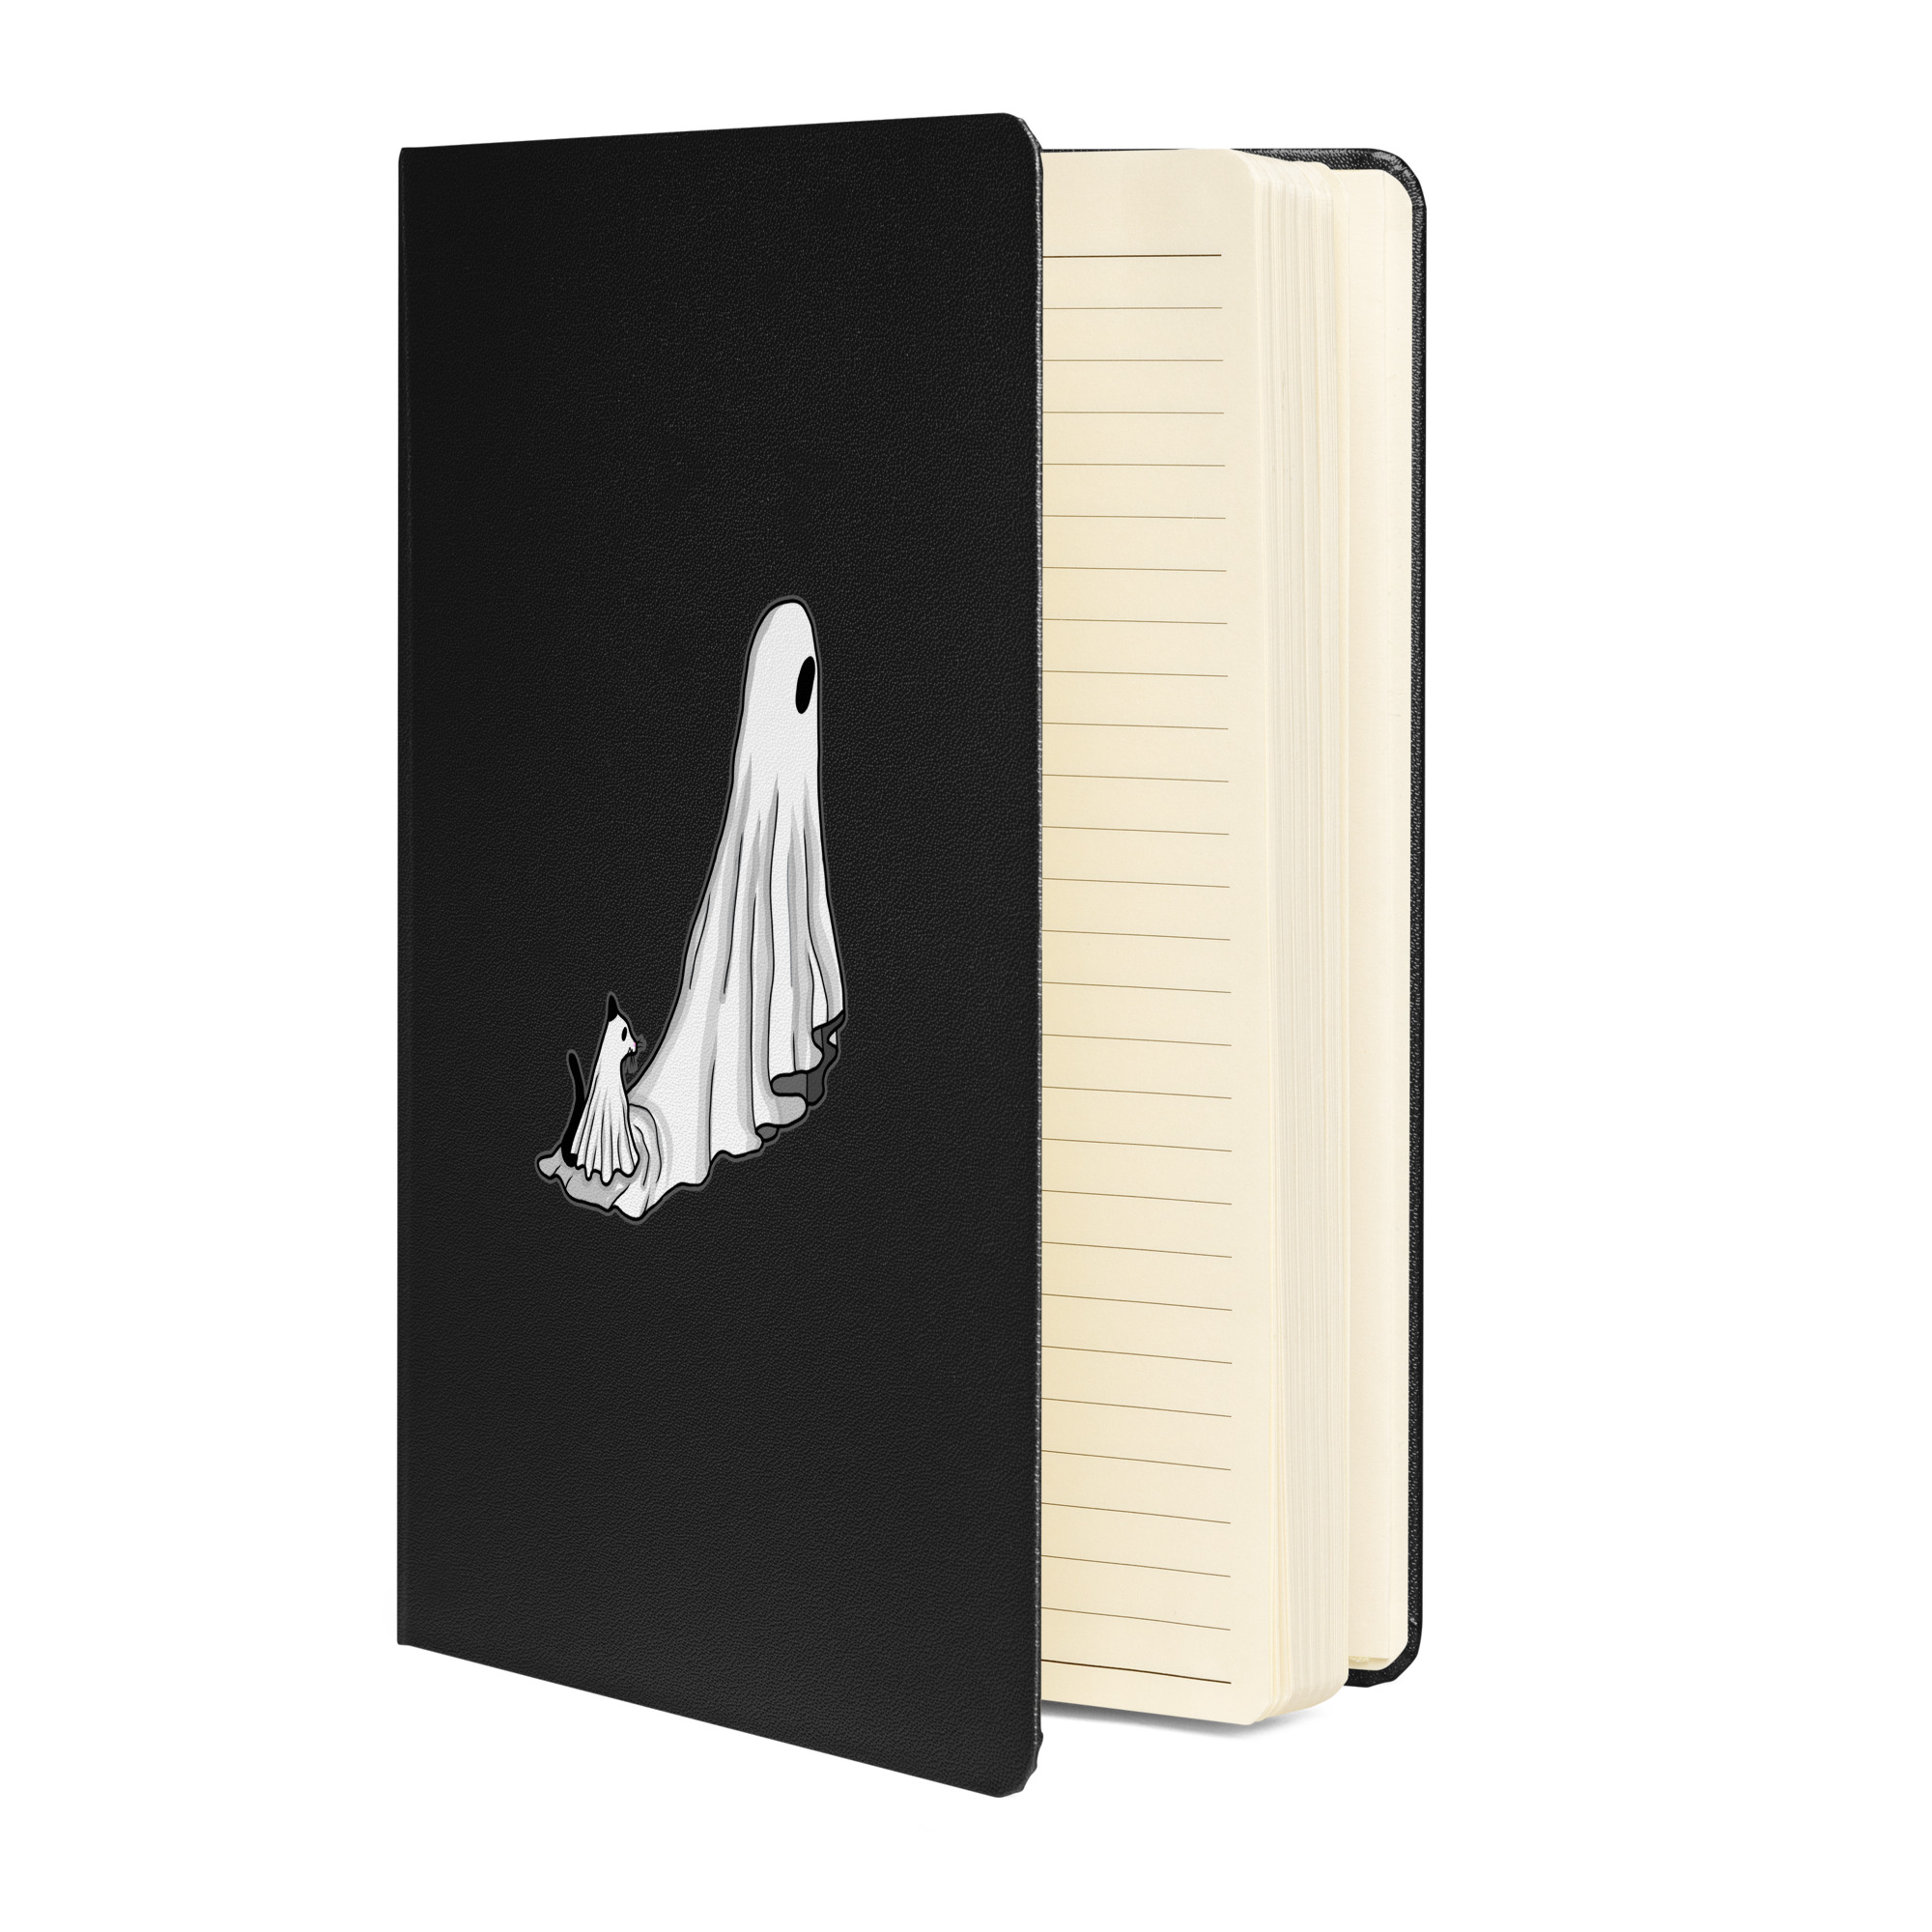 hardcover-bound-notebook-black-front-6537e8d8bd24f.jpg